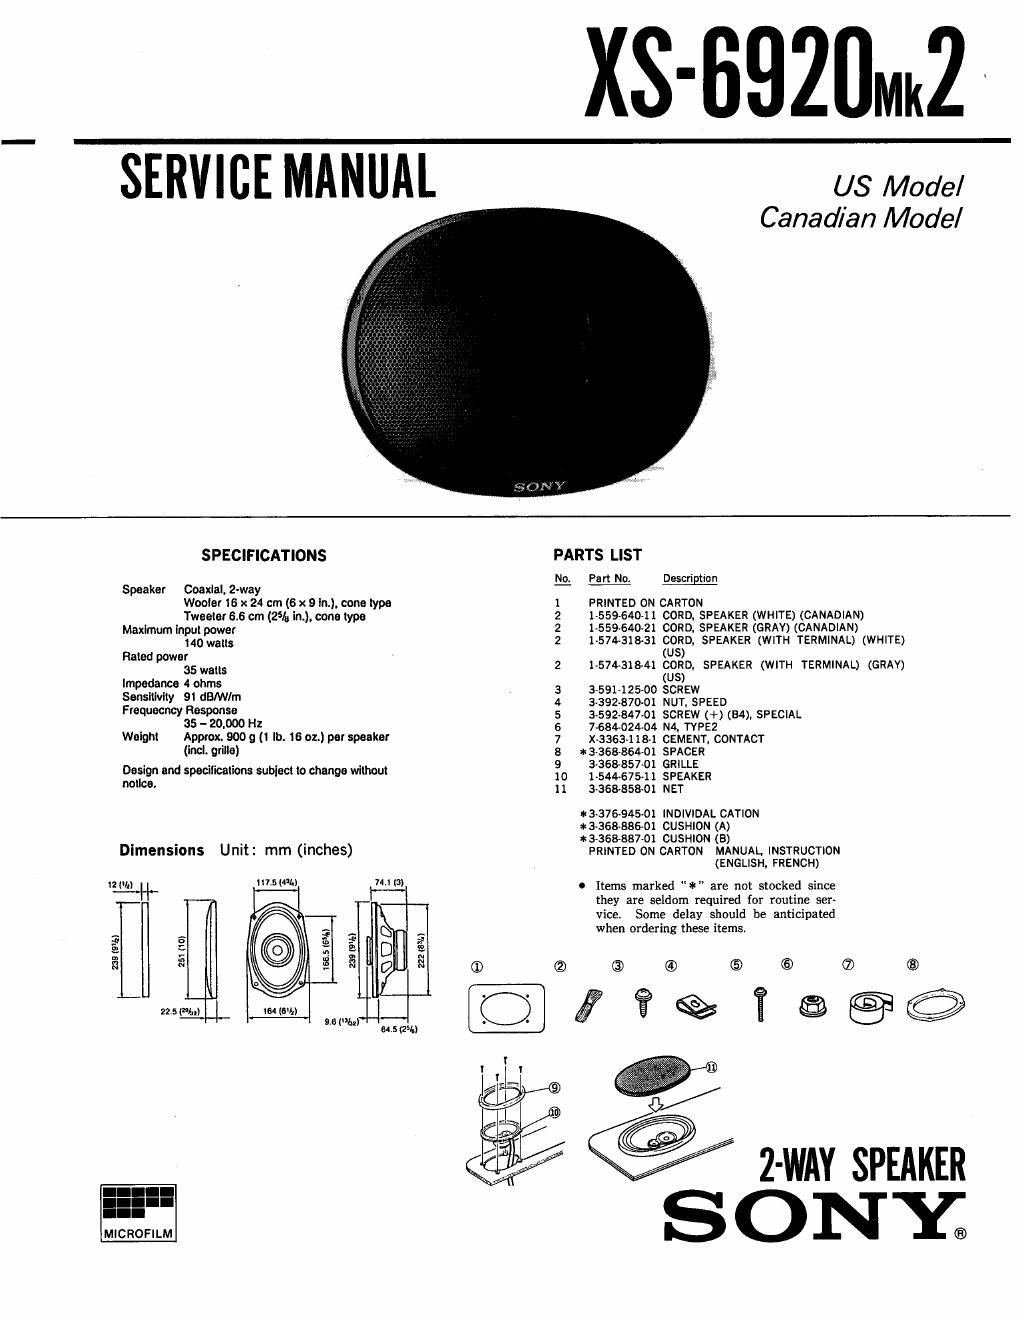 sony xs 6920 mk2 service manual